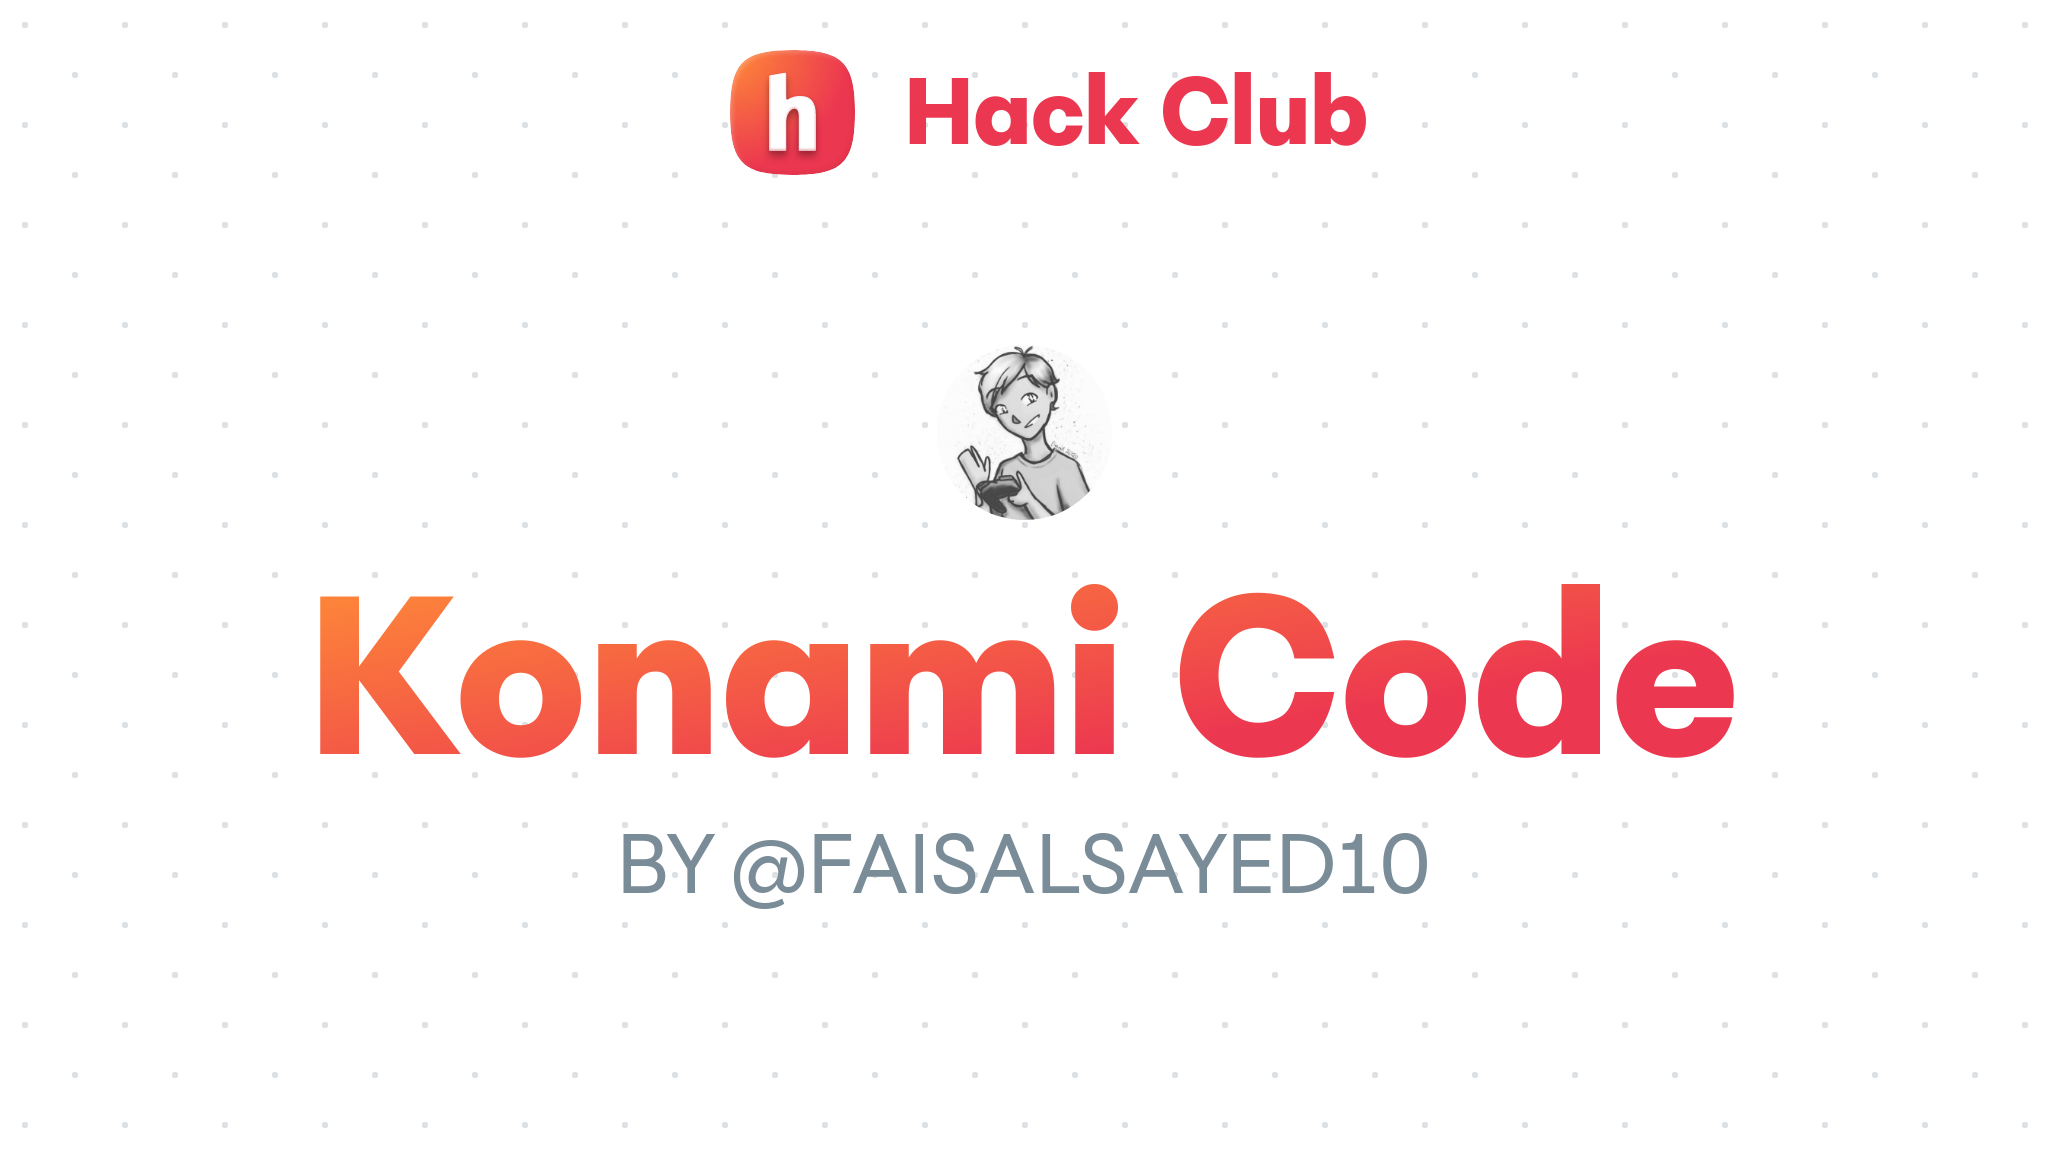 Konami Code Hack Club